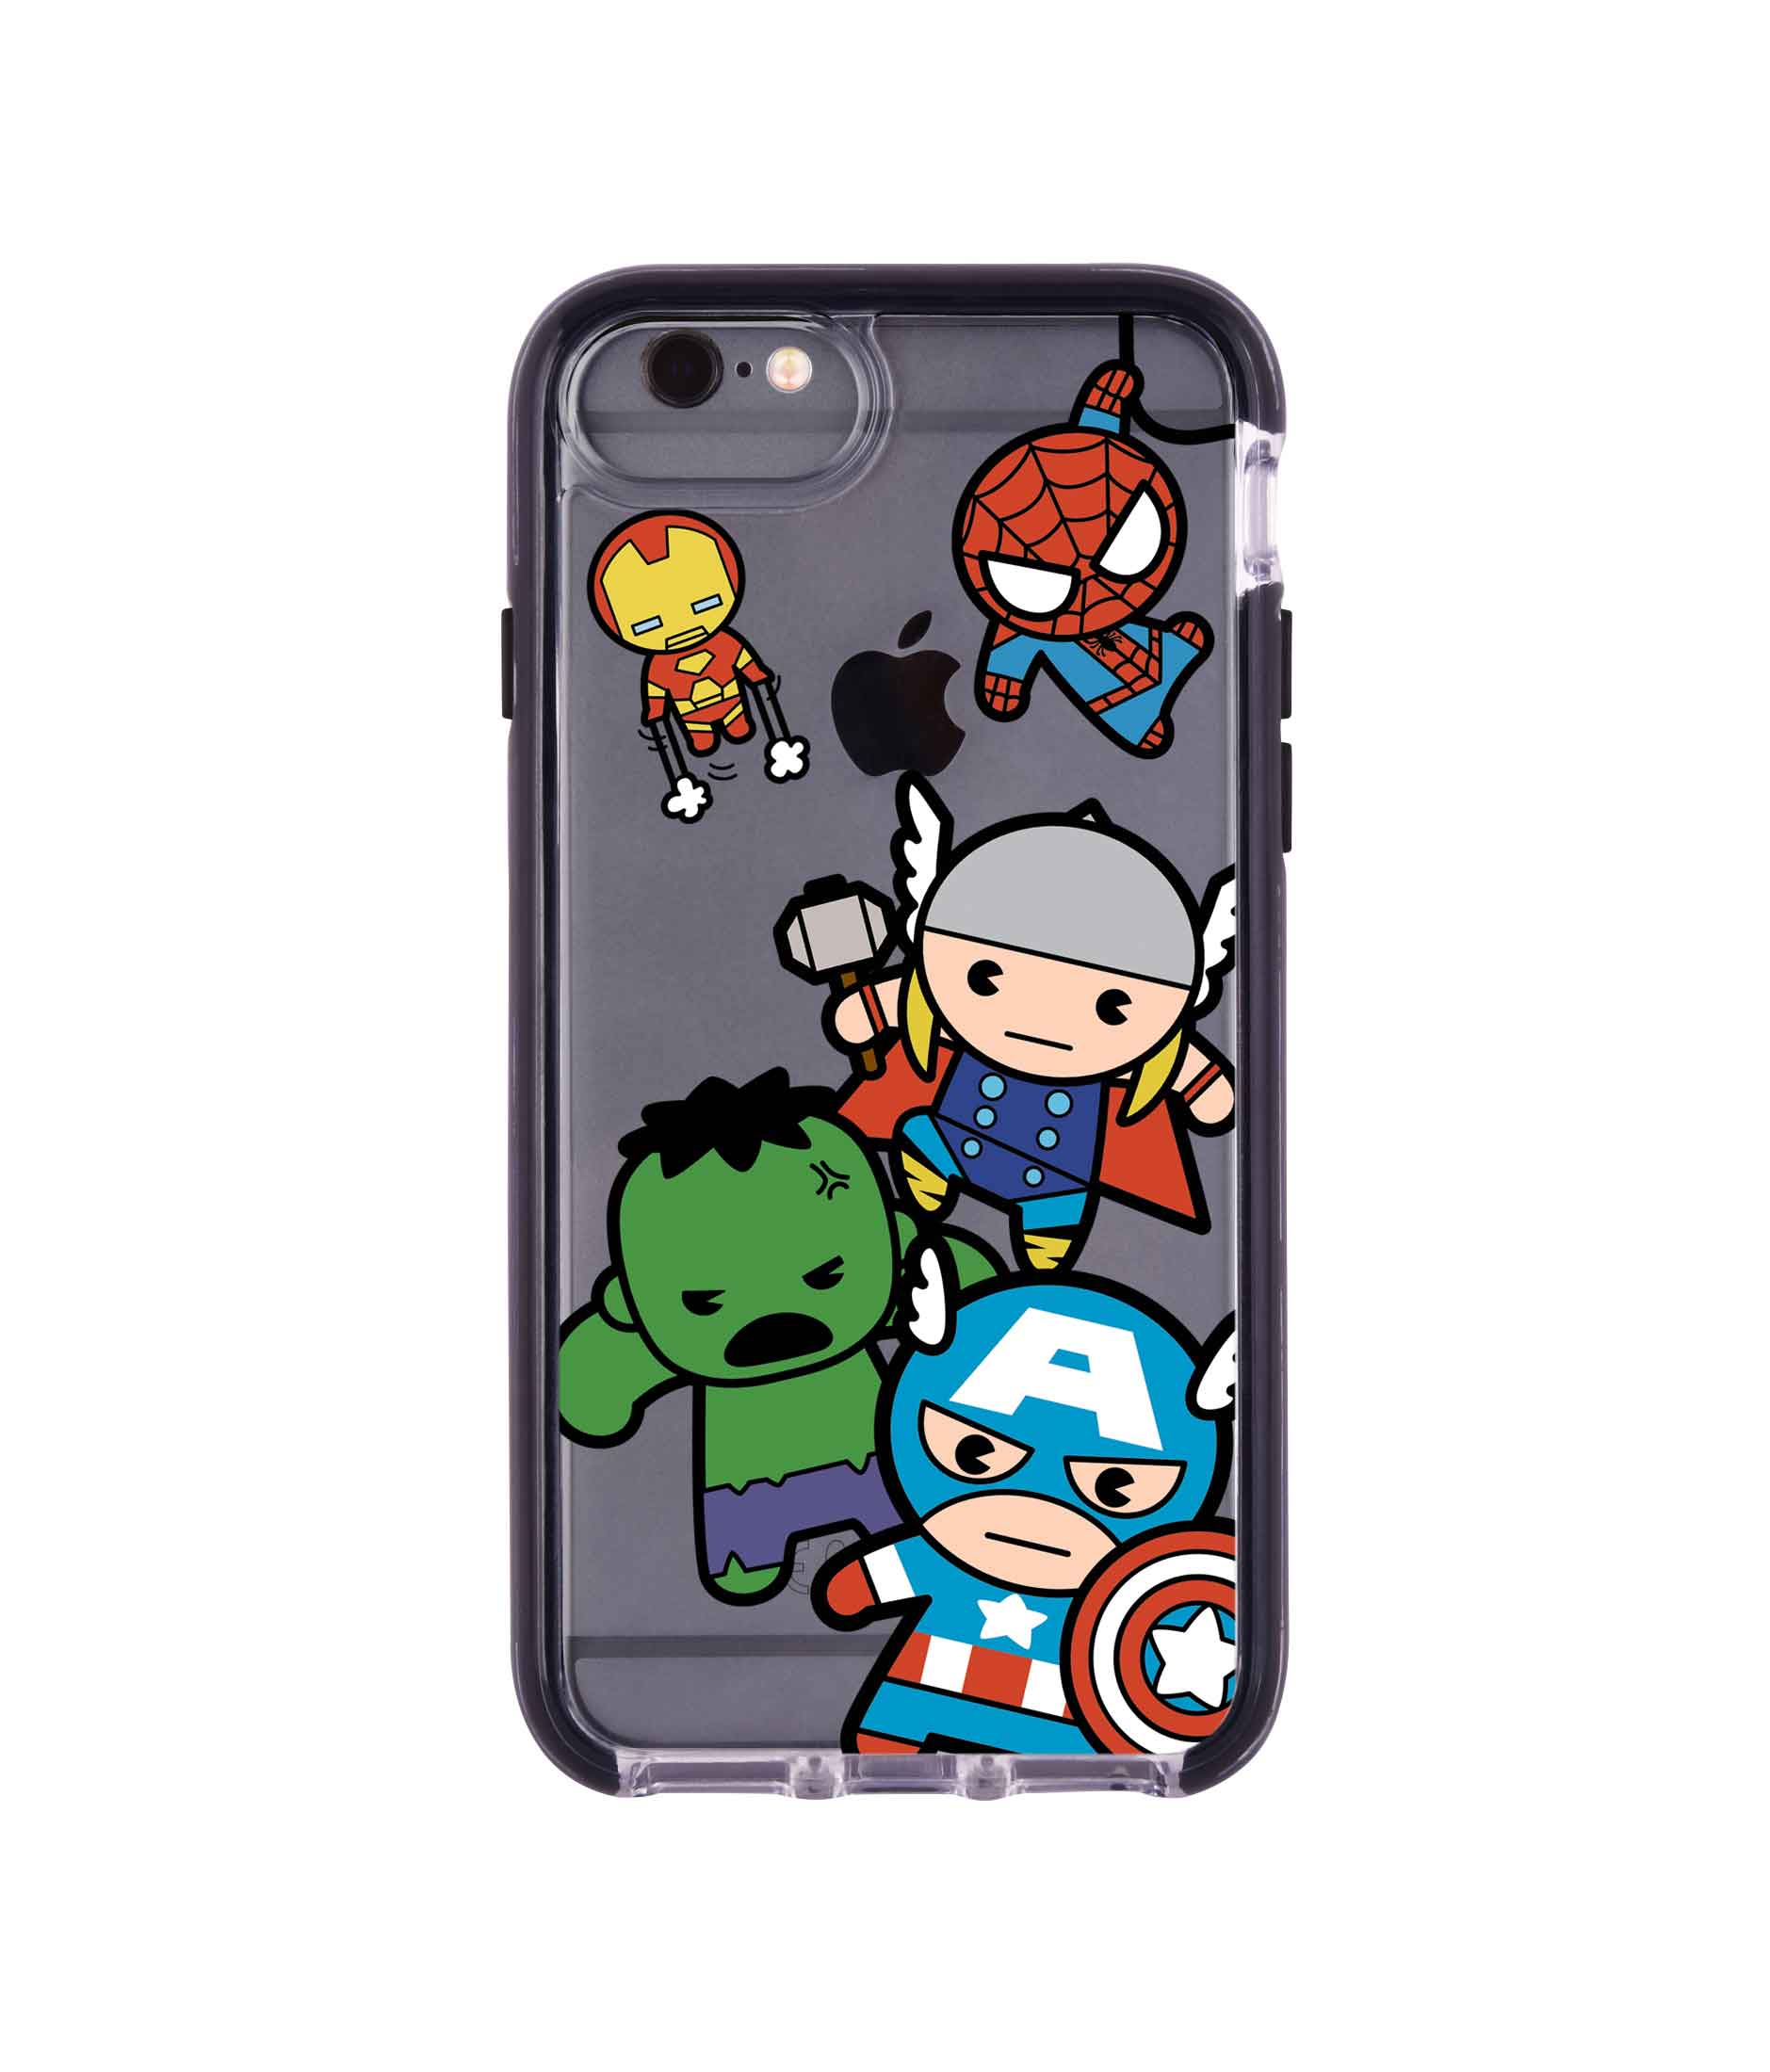 Kawaii Art Marvel Comics - Extreme Phone Case for iPhone 6